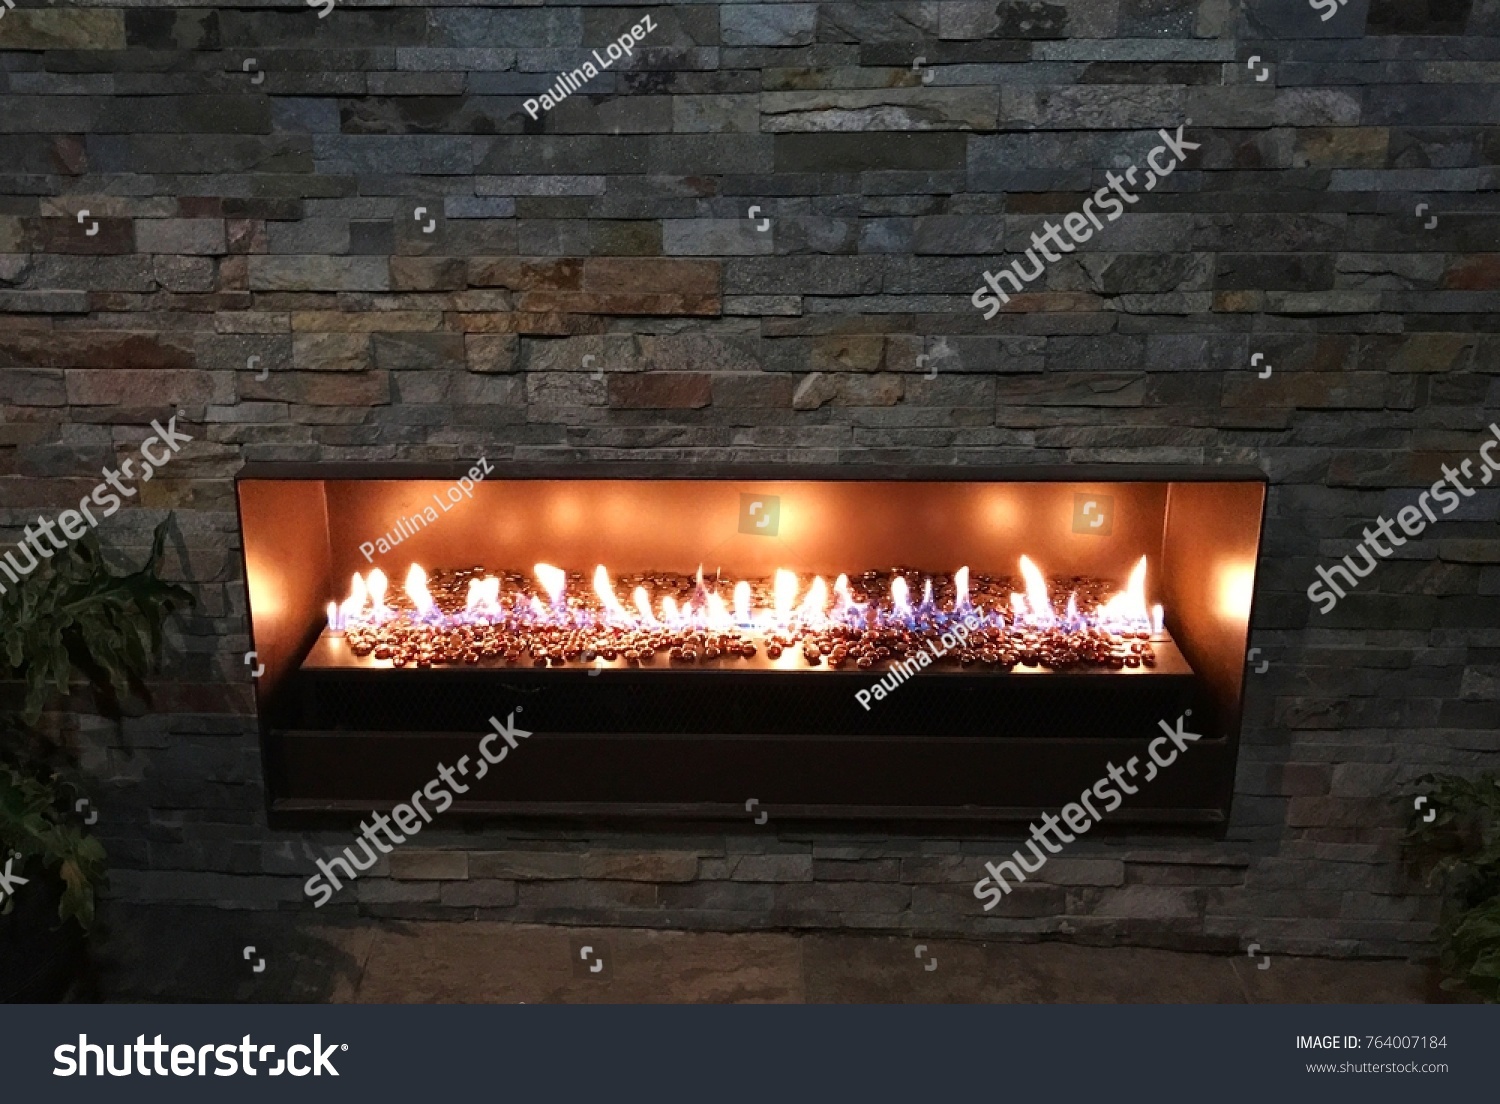 Backyard fireplace in the City #764007184